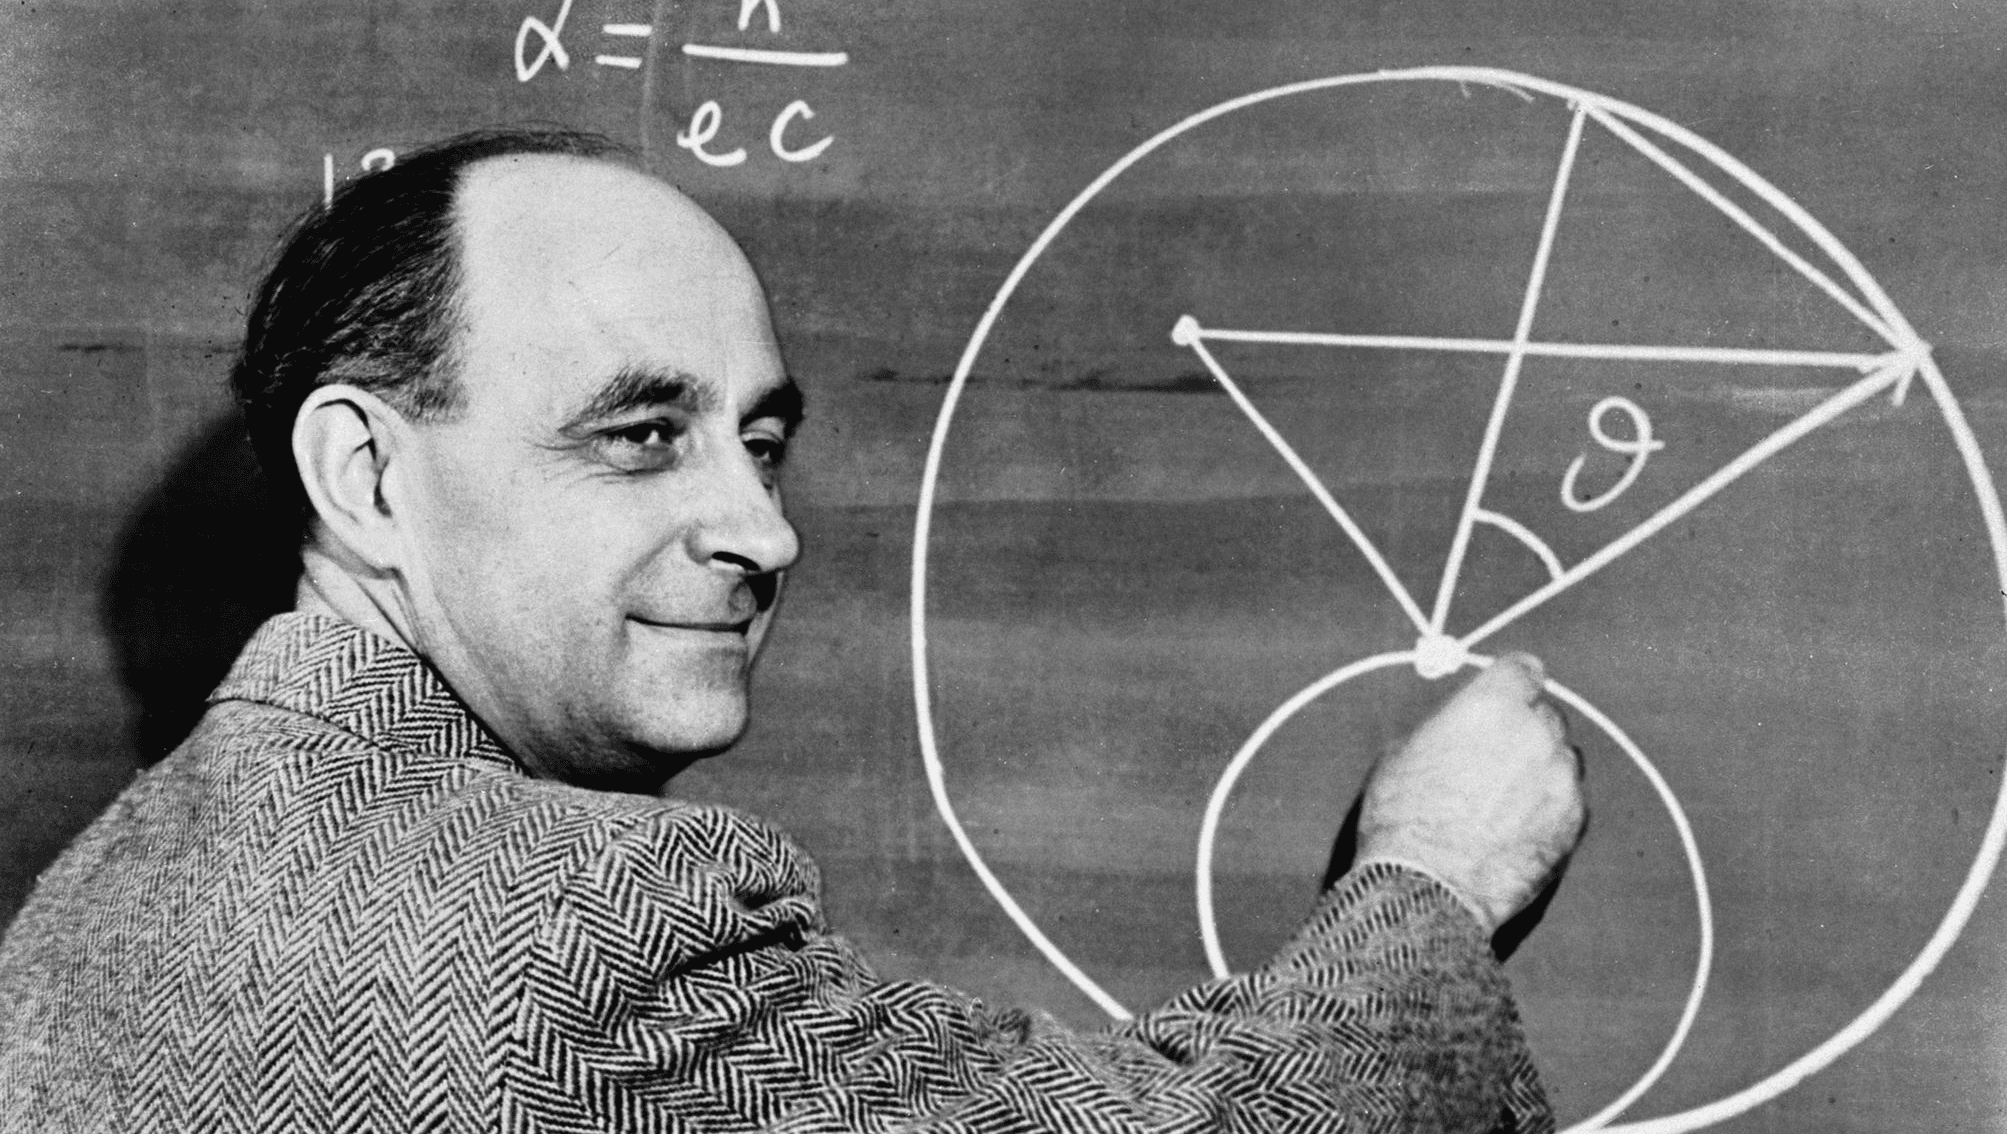 A photograph of Enrico Fermi